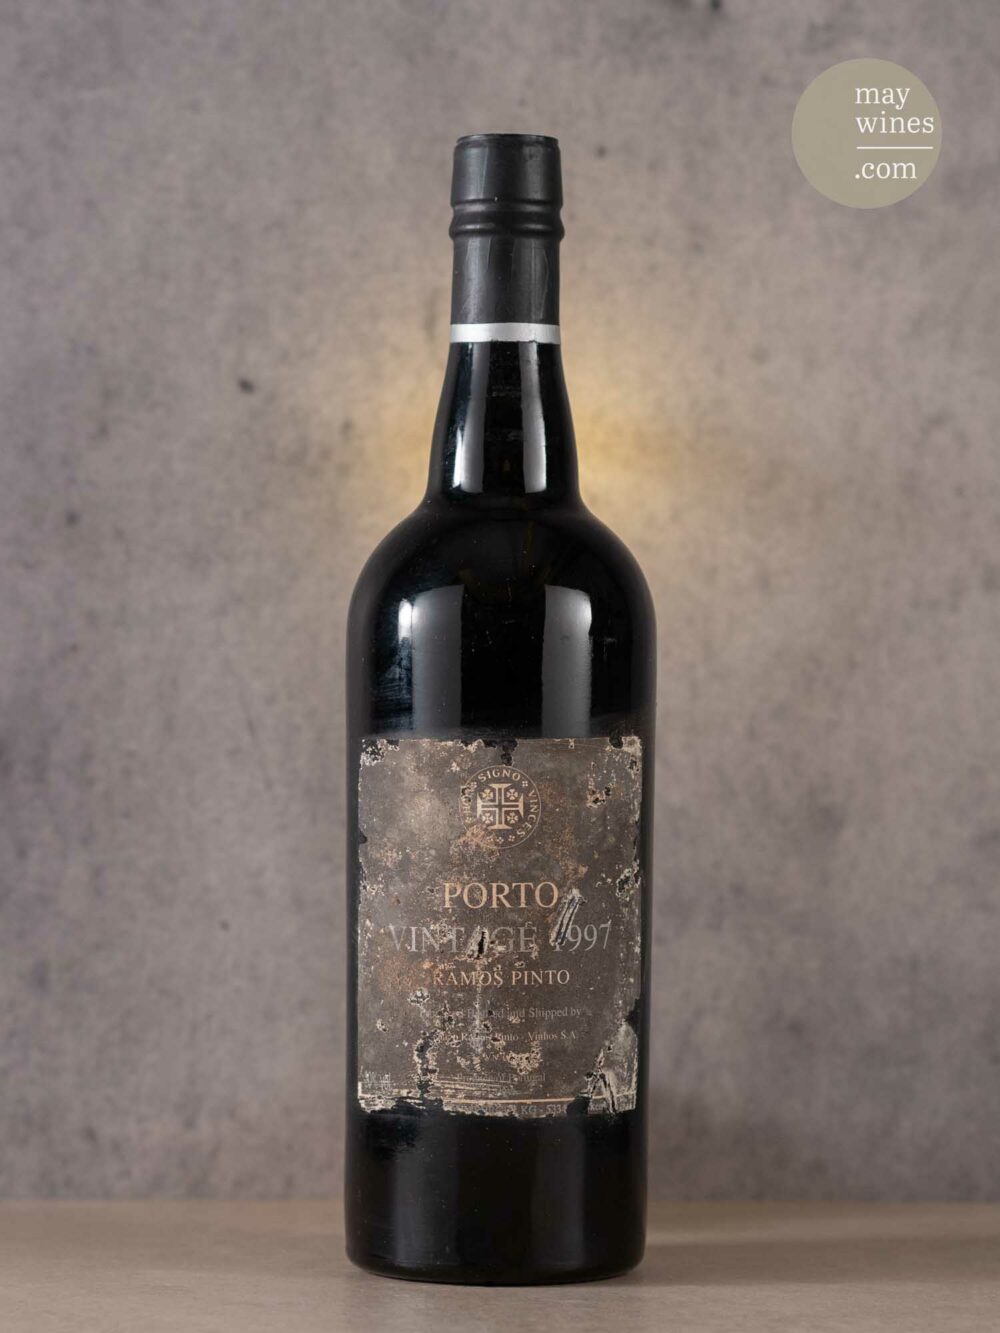 May Wines – Portwein – 1997 Vintage Port - Ramos Pinto